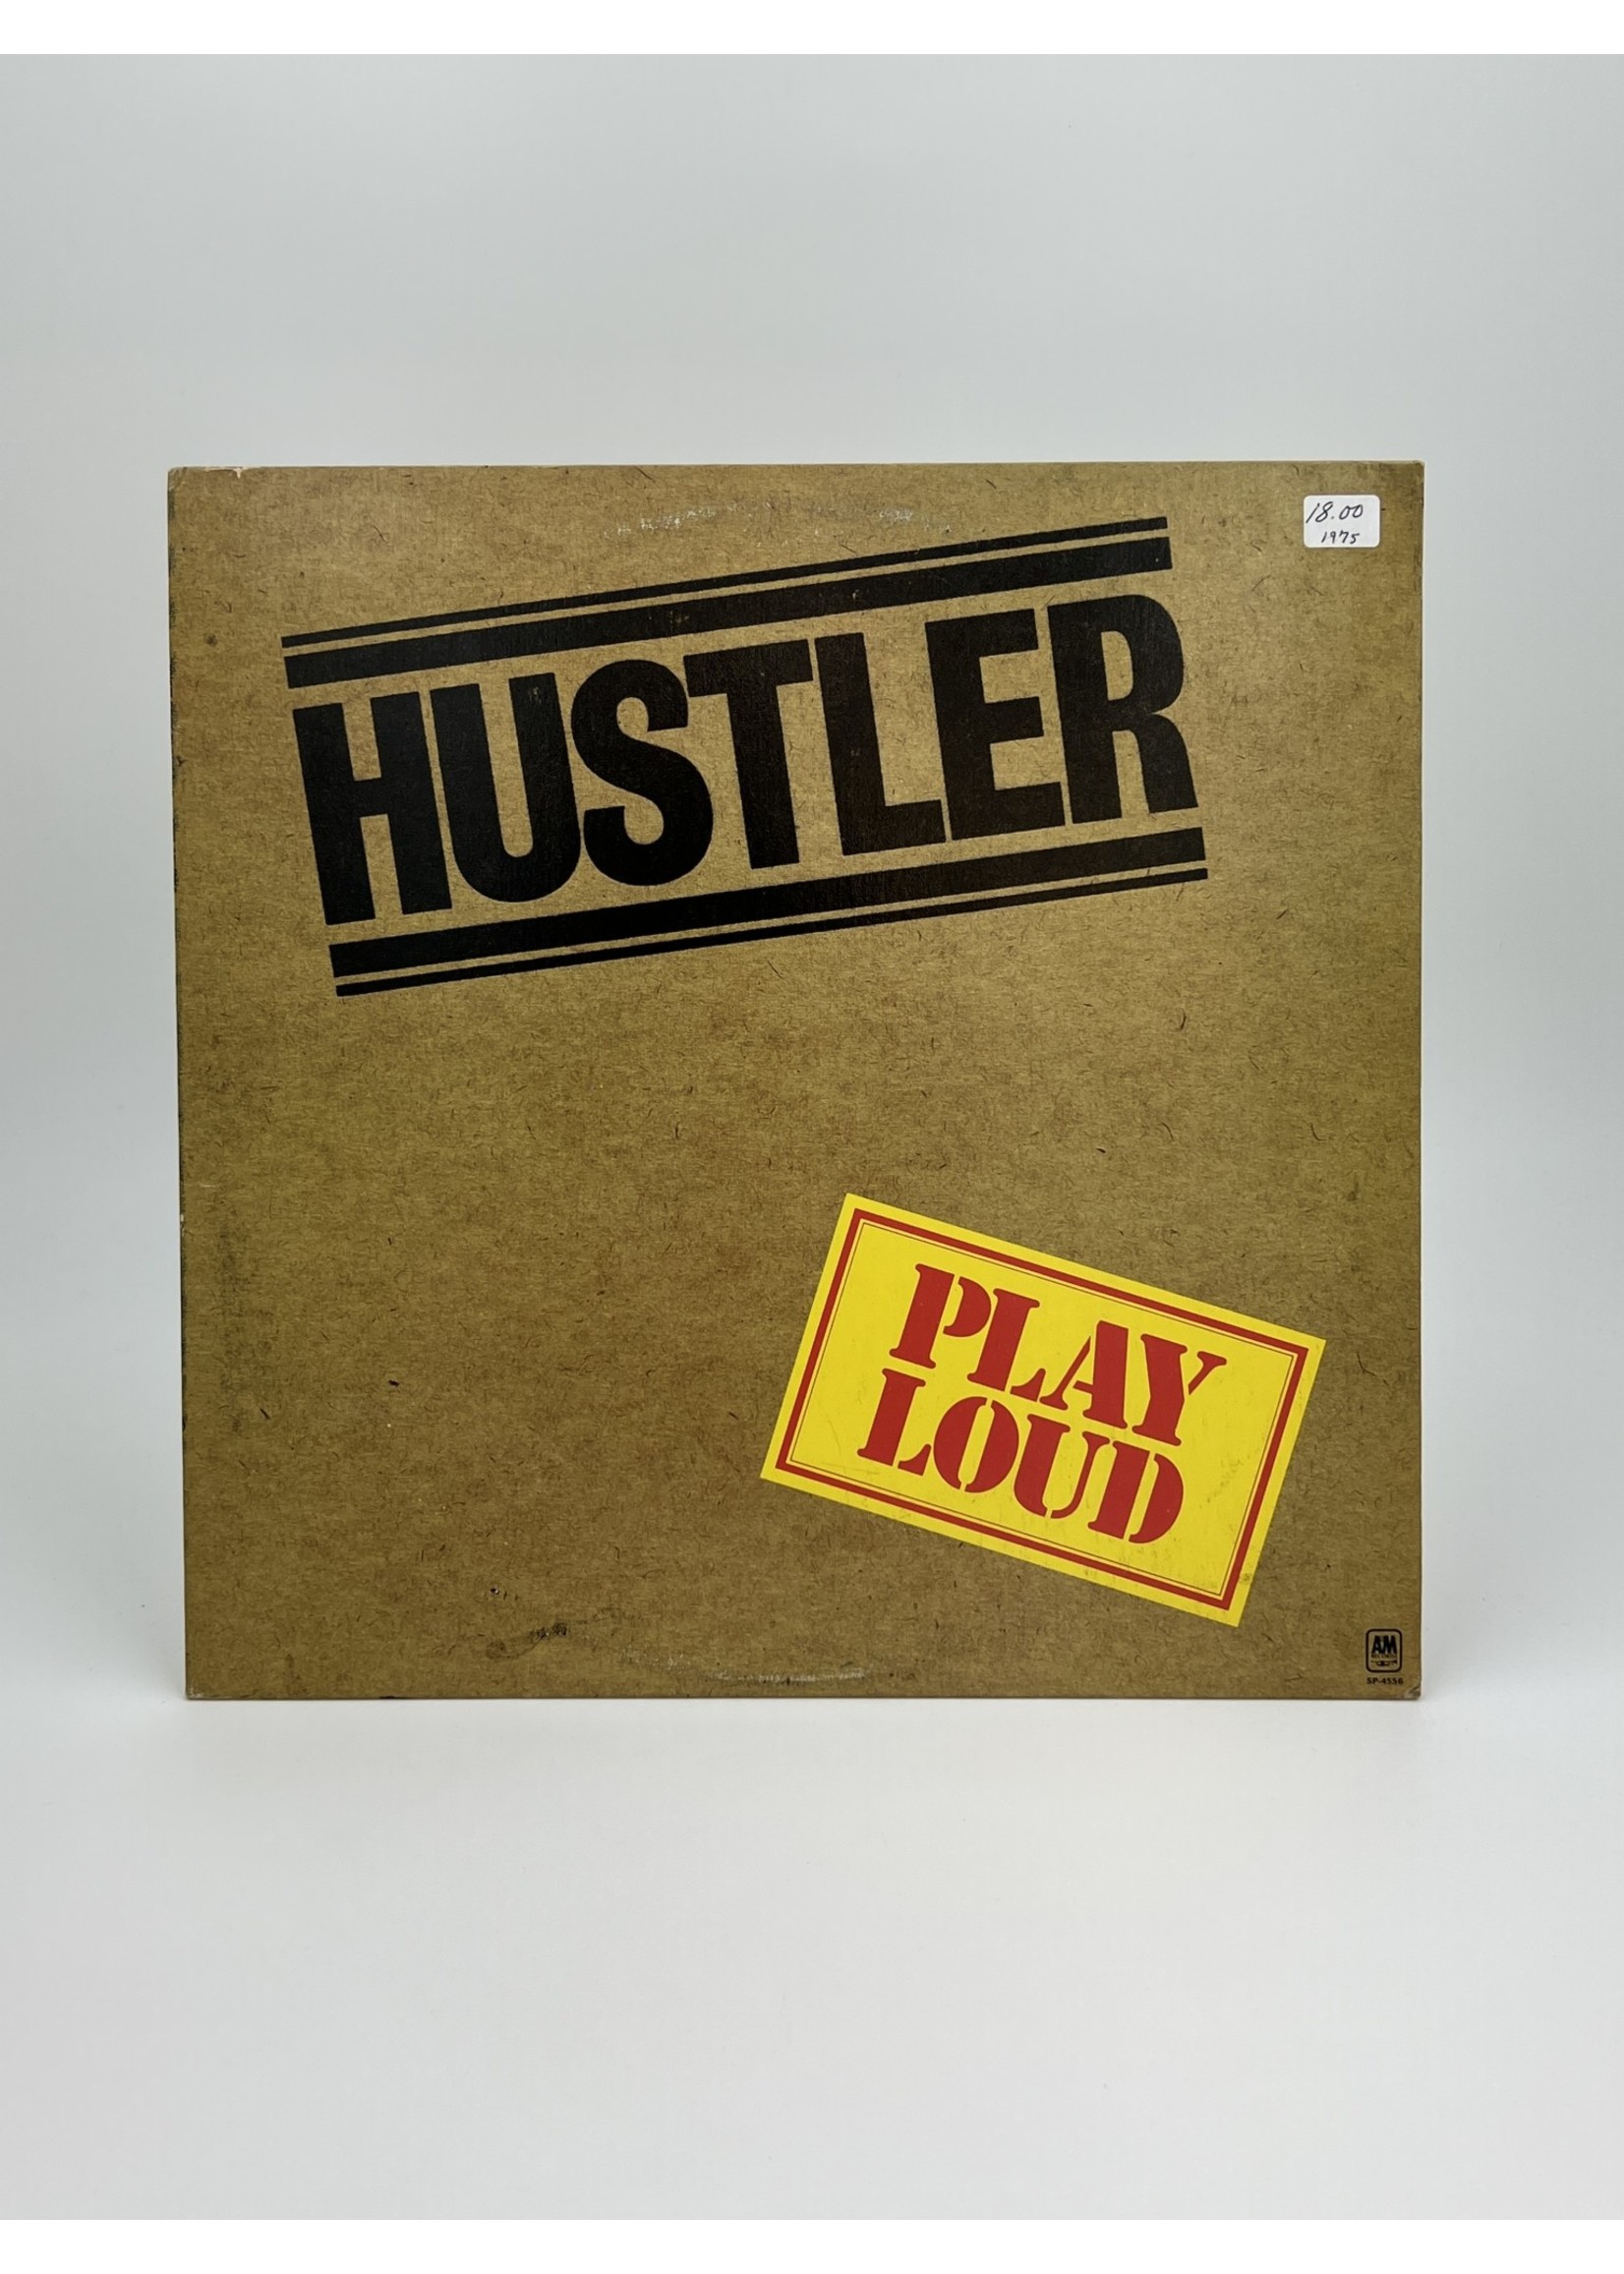 LP Hustler Play Loud LP Record